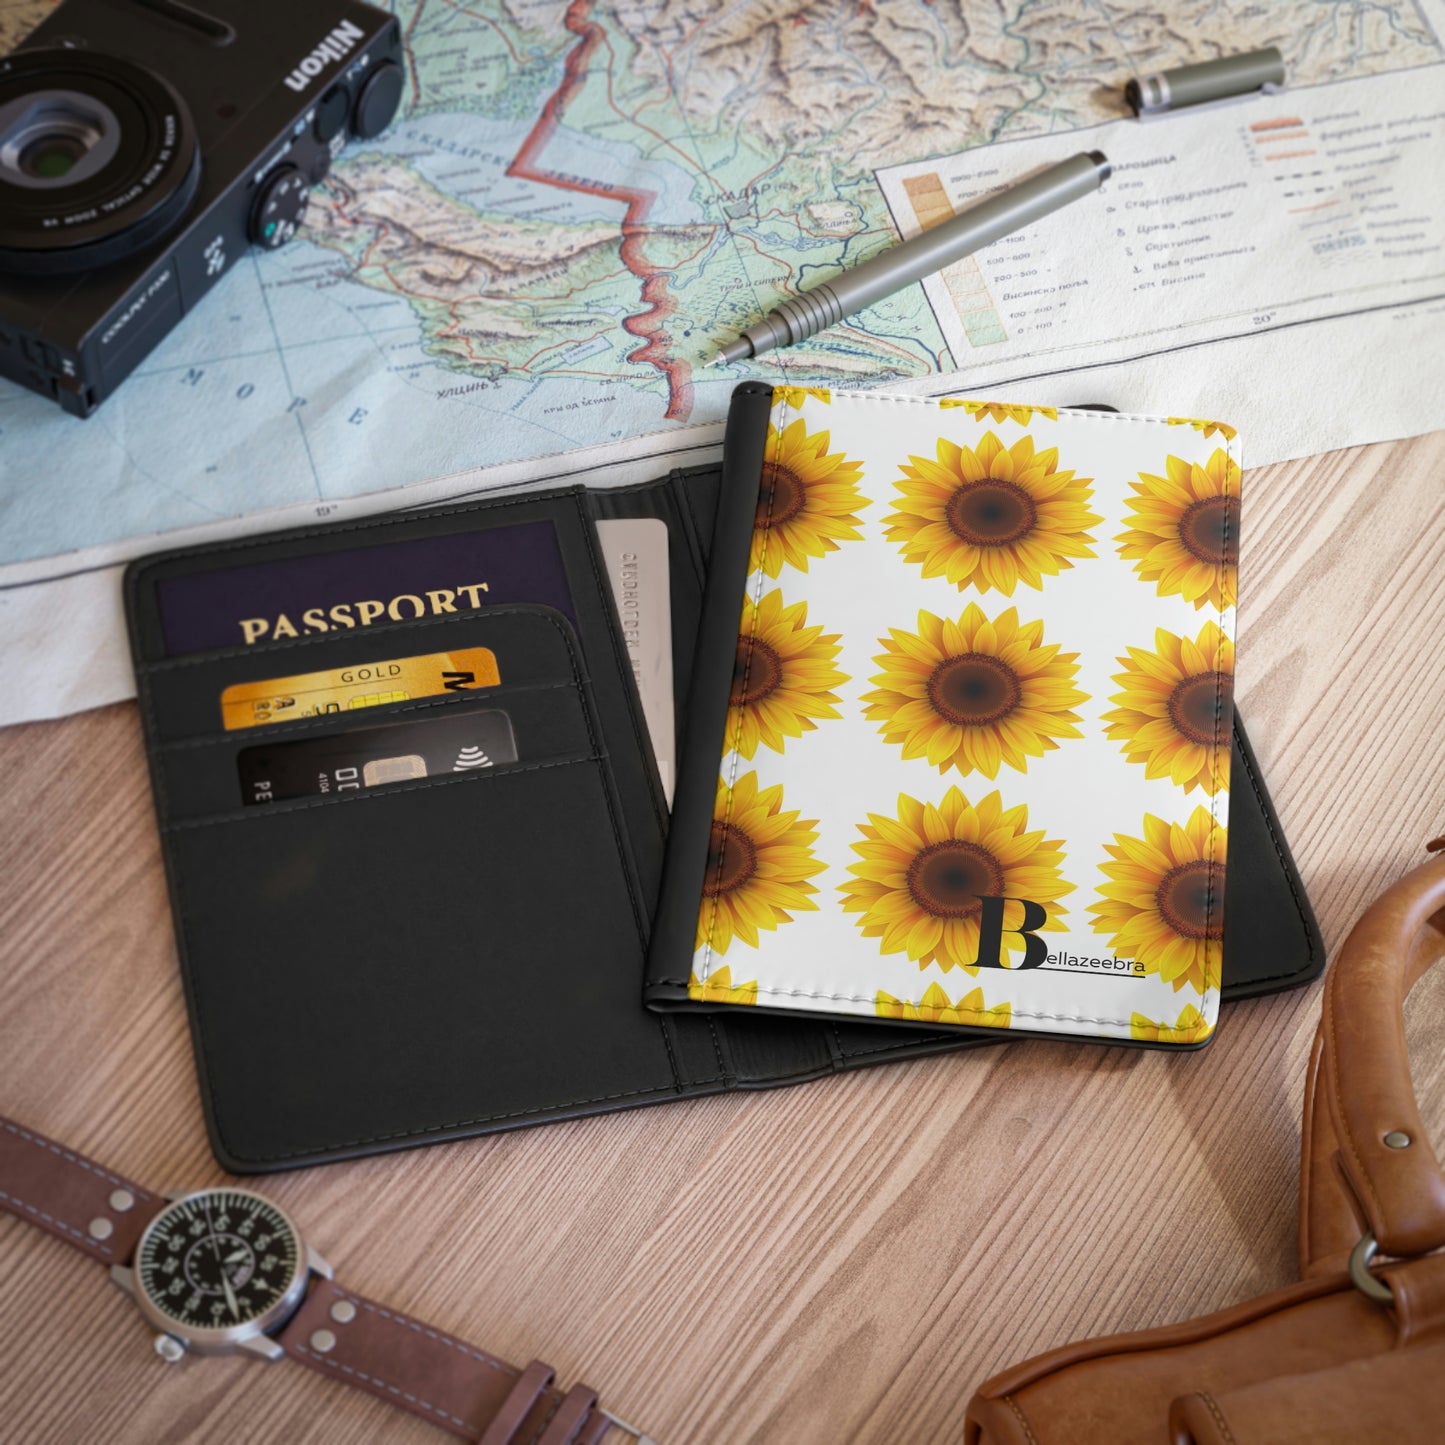 BELLAZEEBRA Passport Cover with repeating sunflowers design